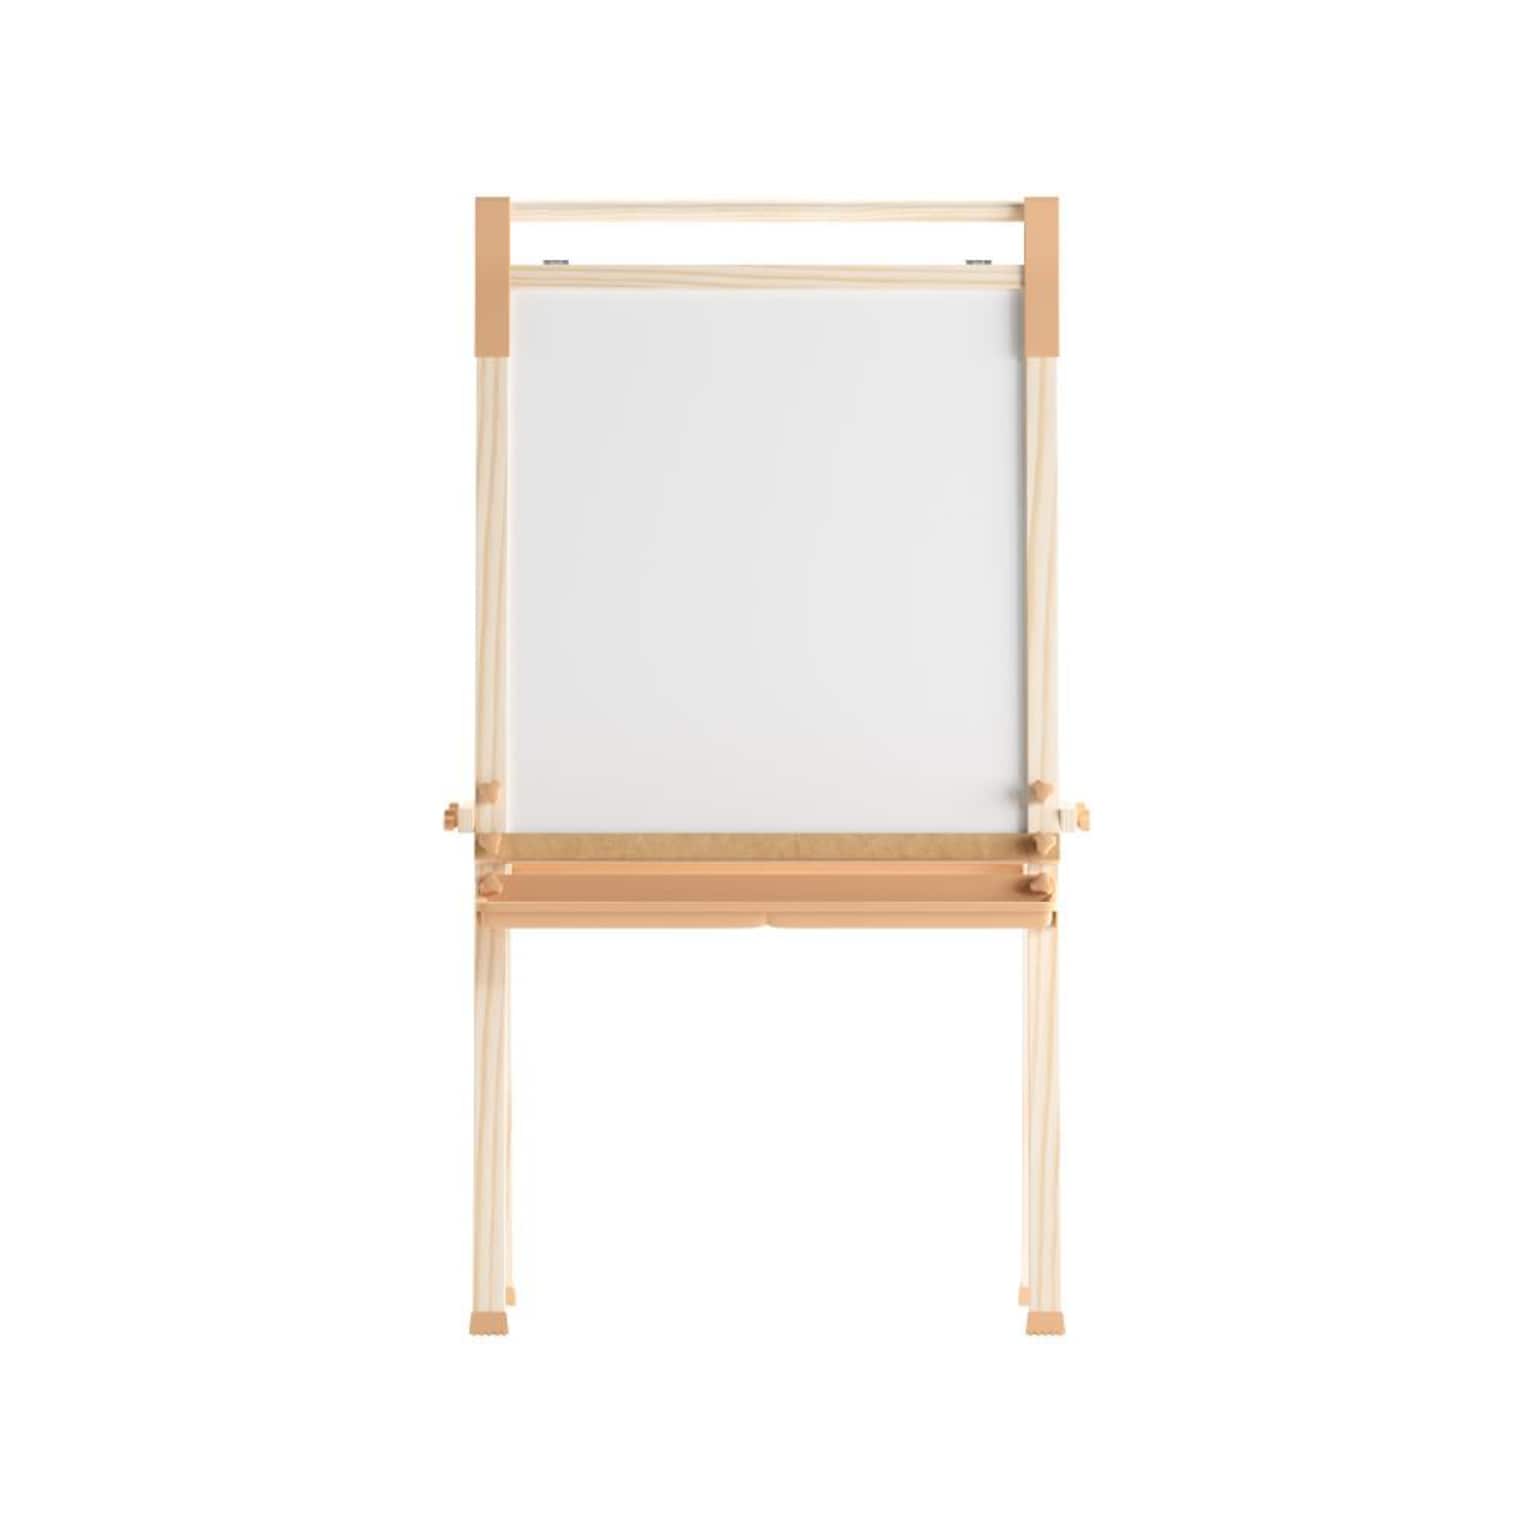 Flash Furniture Bright Beginnings Art Easel, 49, Natural Birch Plywood (MK-ART-9000-GG)